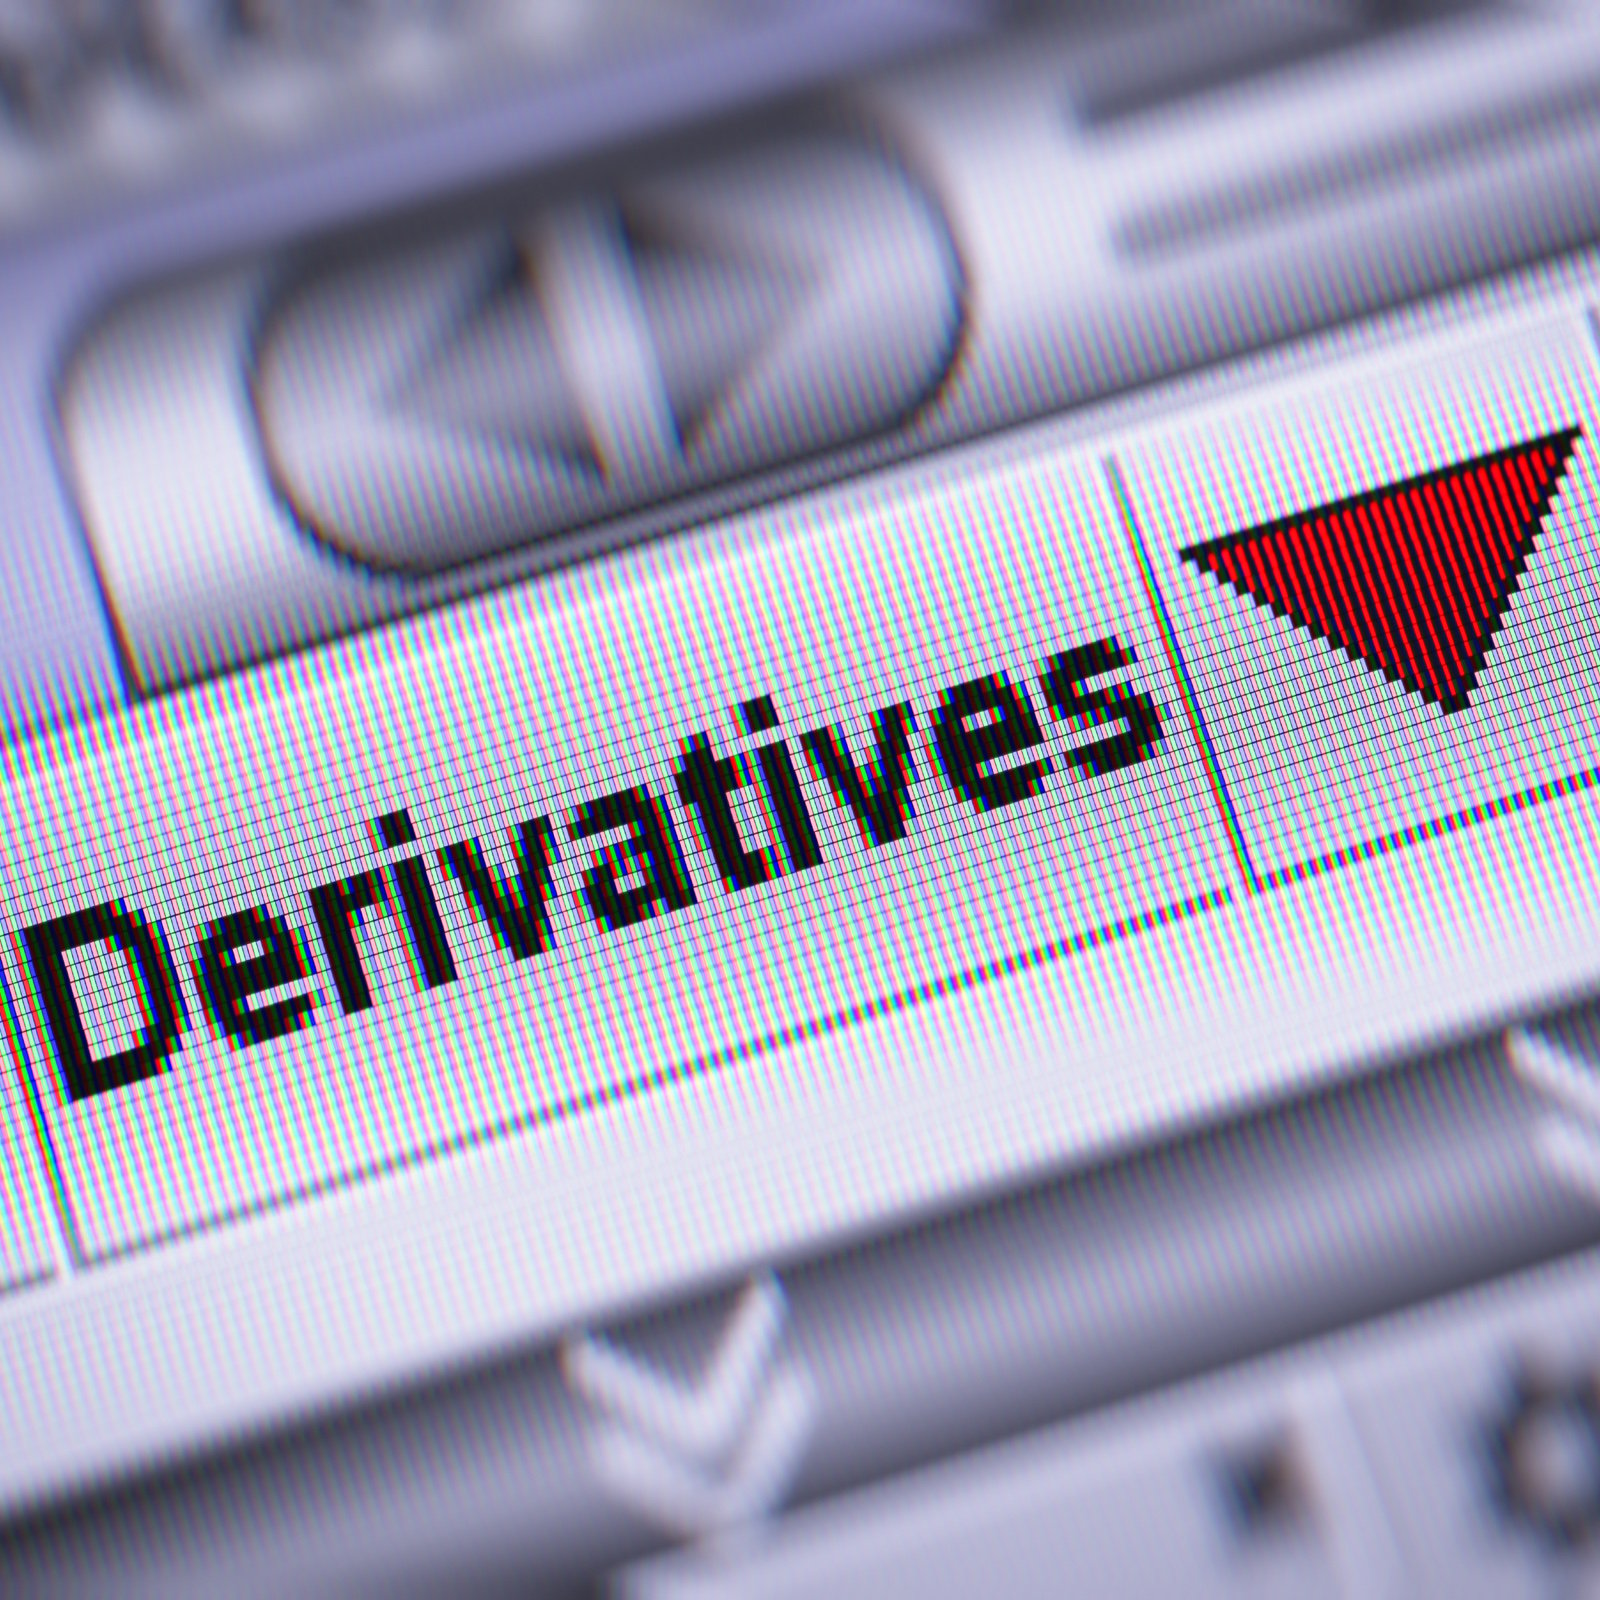 European Regulator Renews Restrictions on Crypto-Based Derivatives